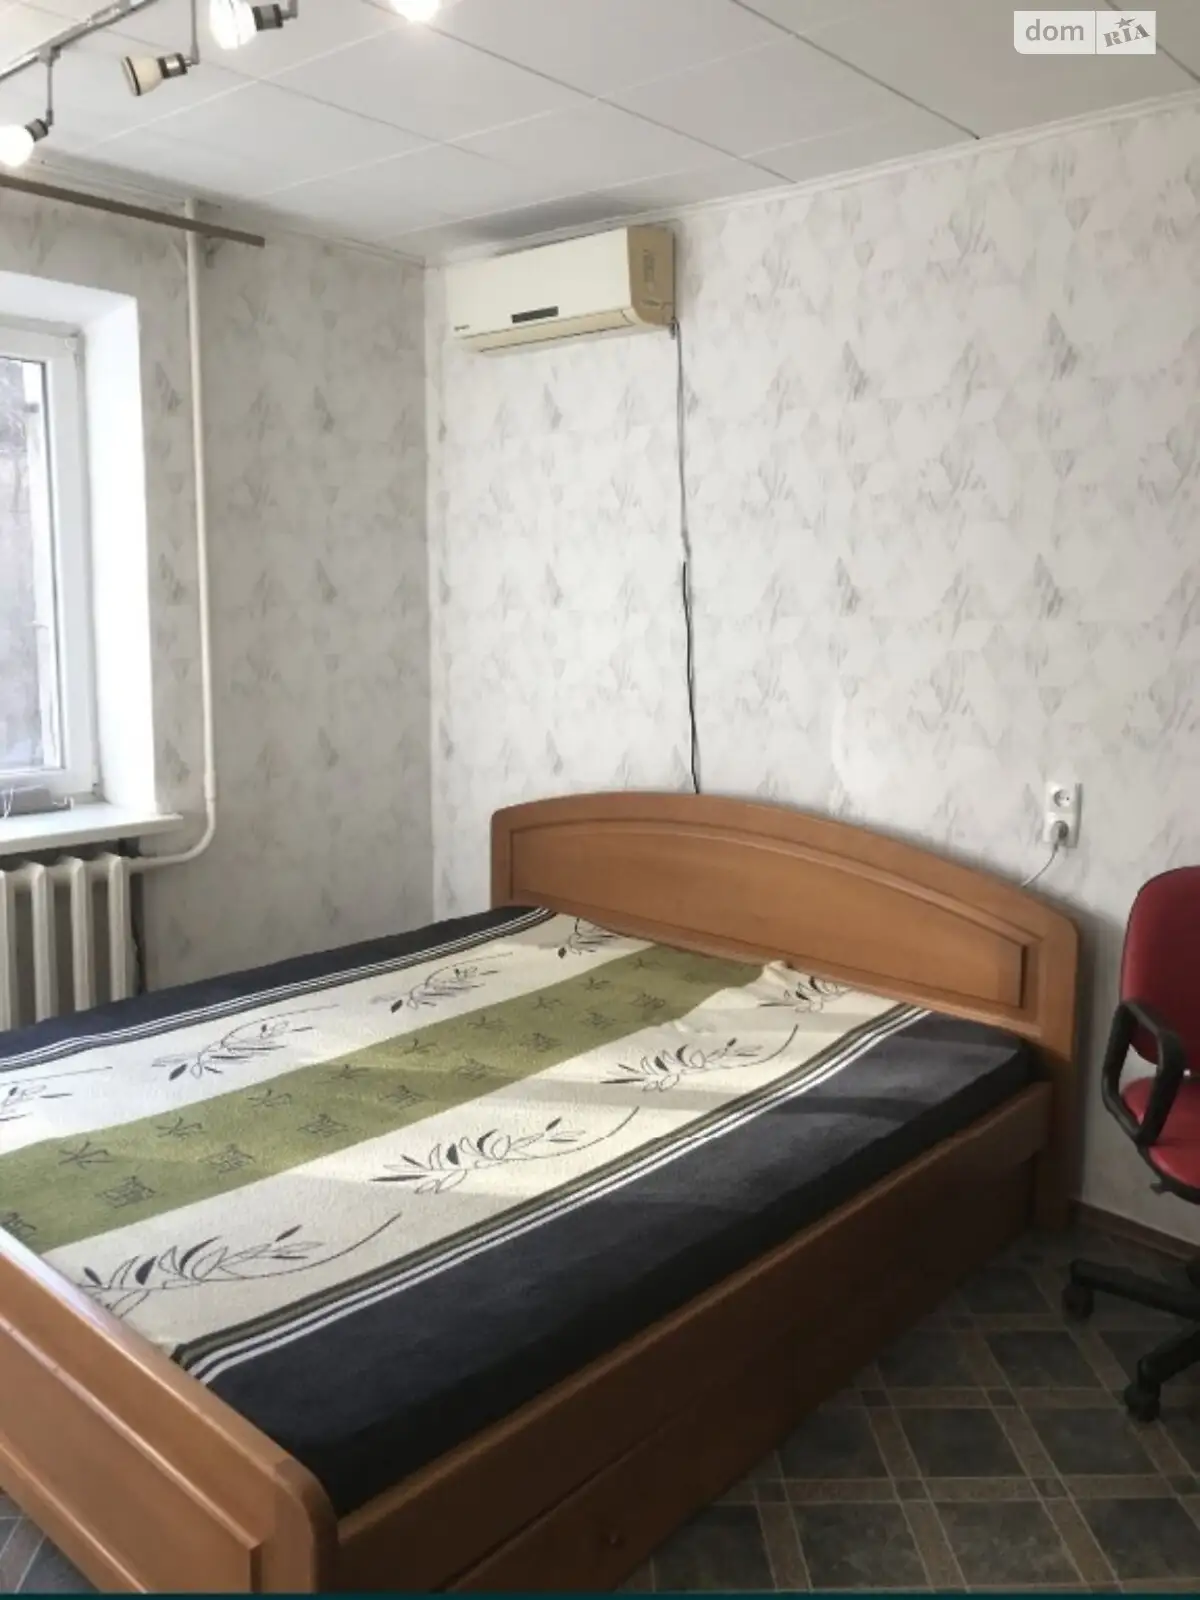 Продается комната 29 кв. м в Одессе, цена: 18500 $ - фото 1